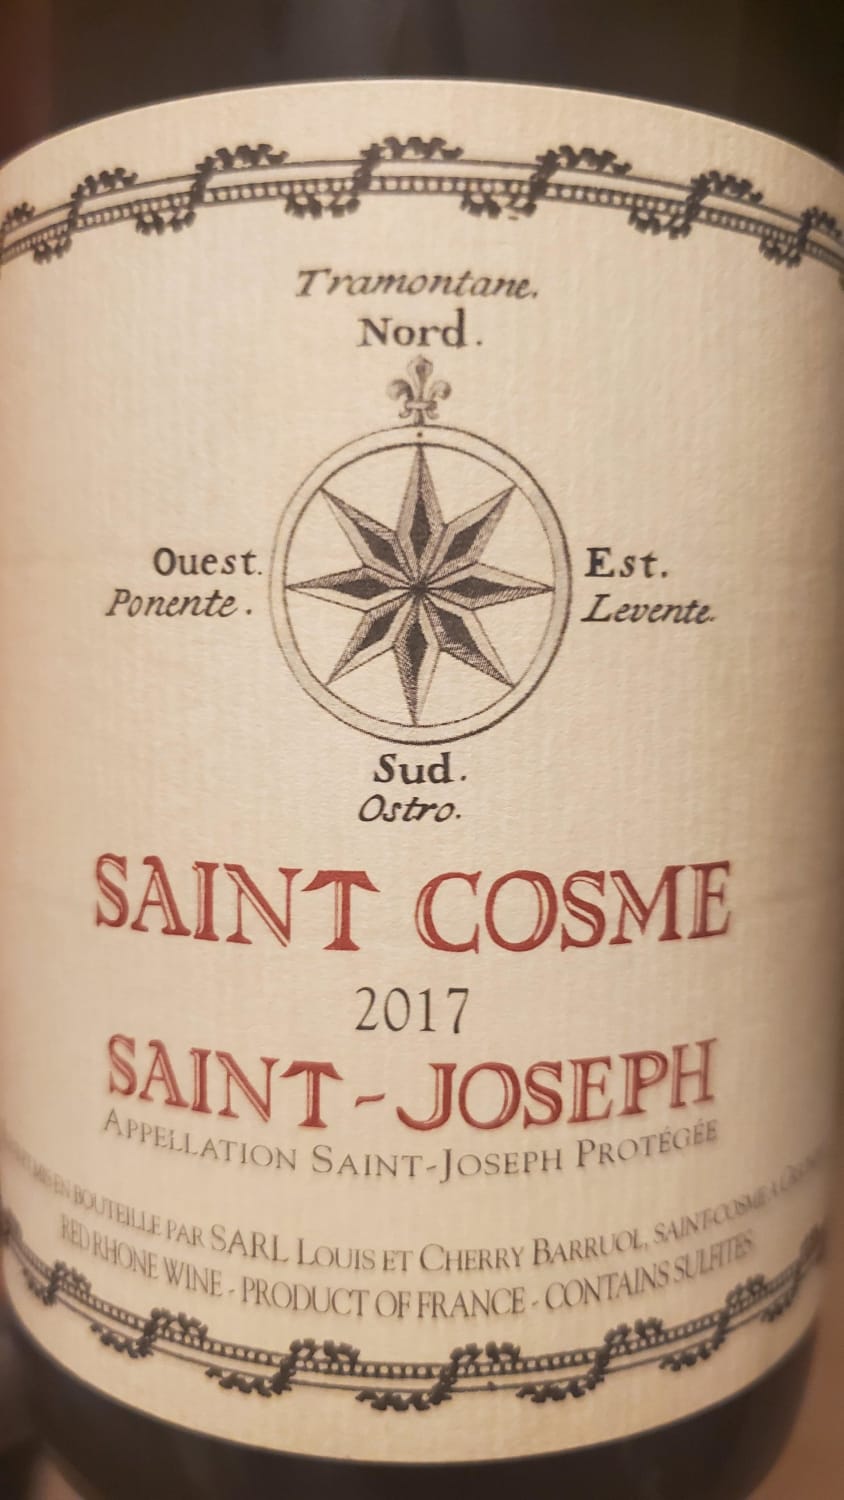 Saint Cosme St. Joseph 2017